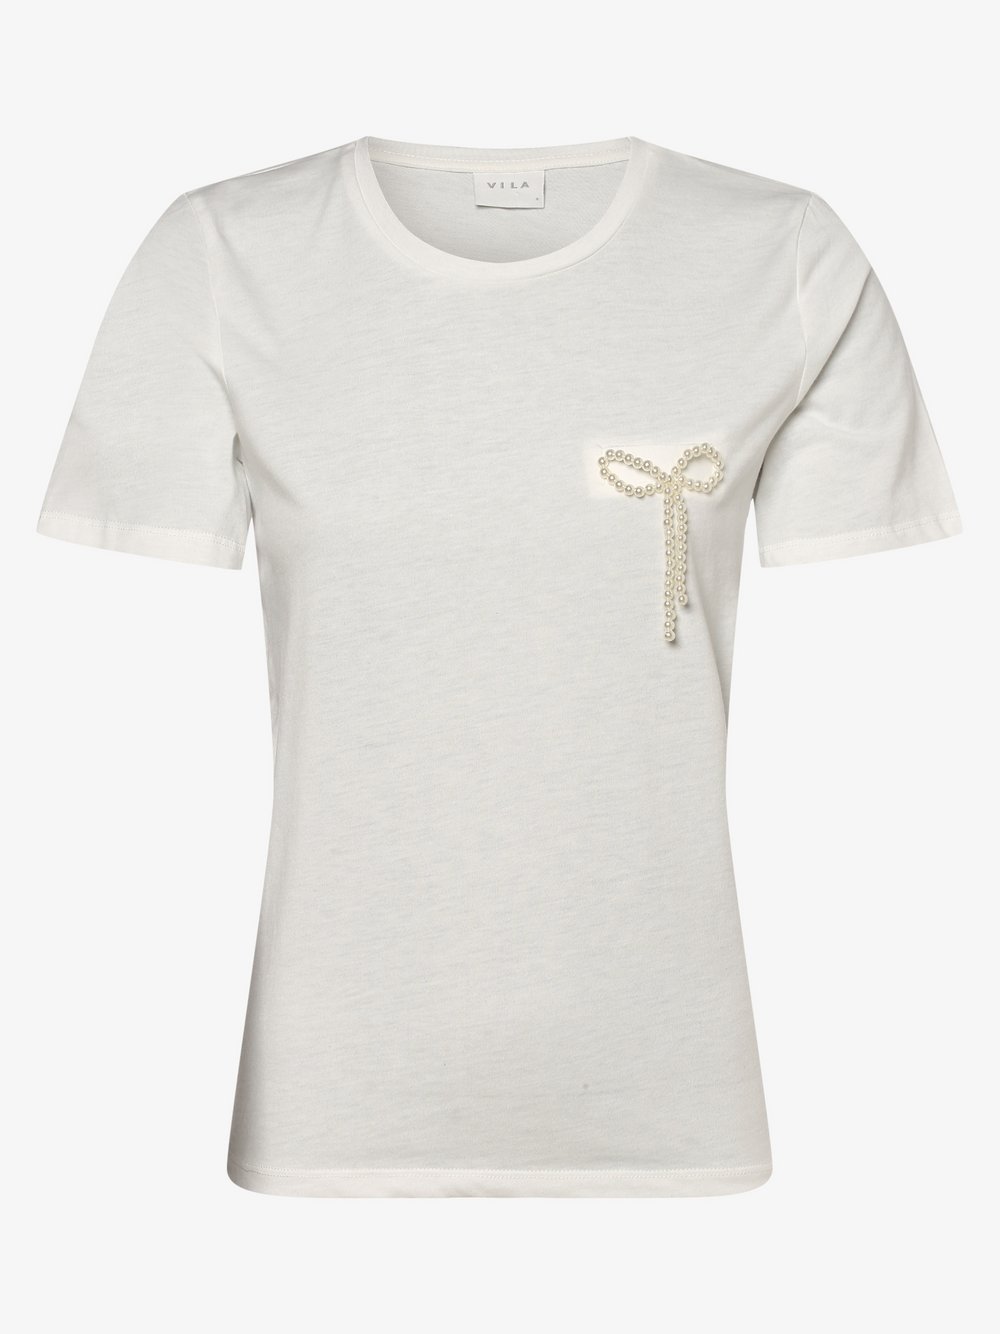 Vila - T-shirt damski – VIDreami, biały